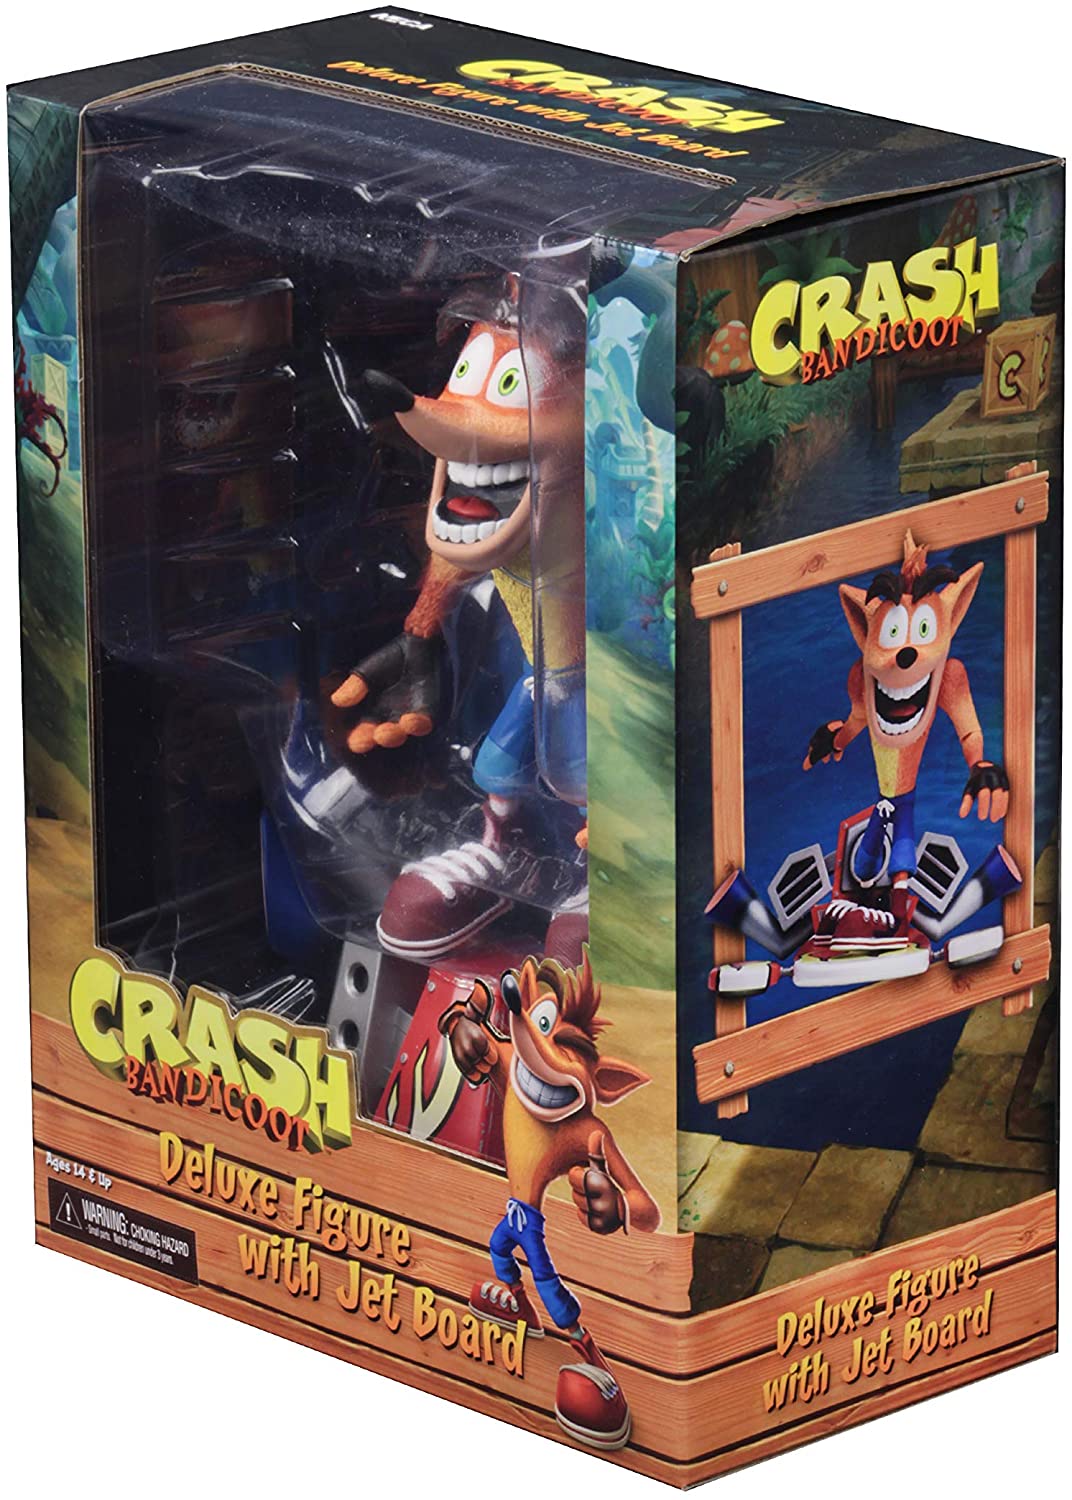 Neca: Crash Bandicoot - Deluxe Figure with Jet Board - Third Eye